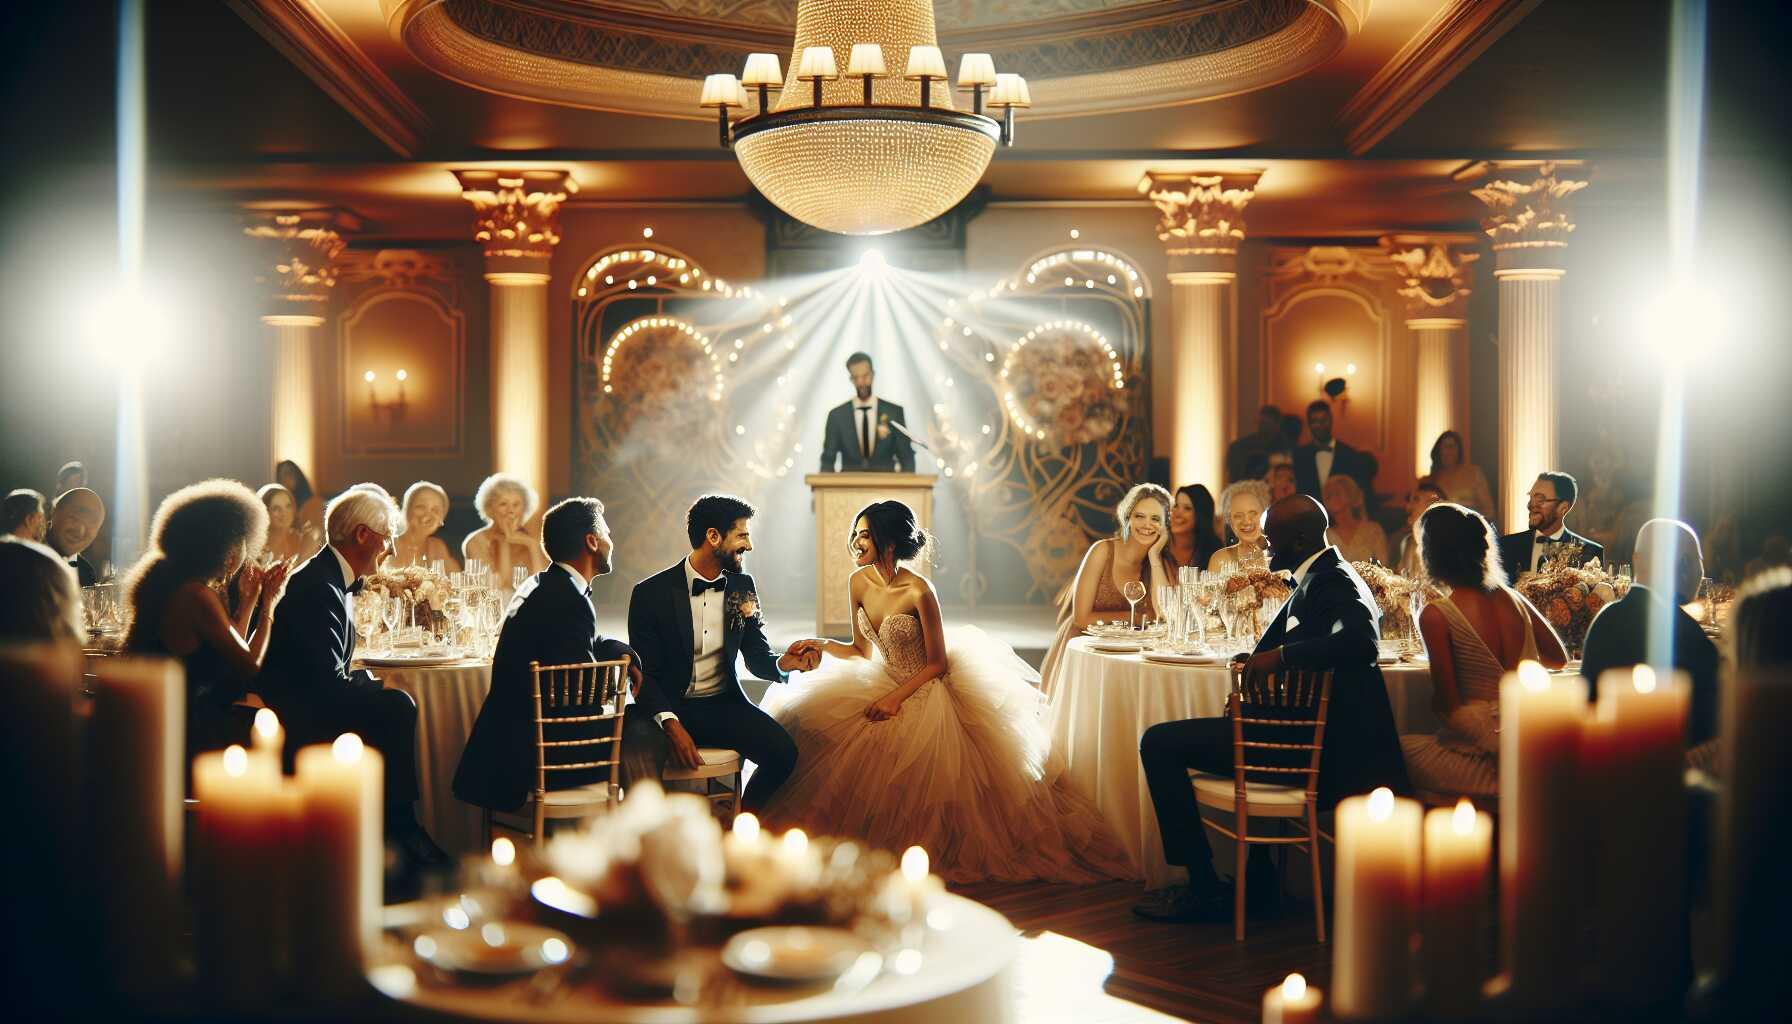 10 Sample Wedding Speeches to Make Your Big Day Unforgettable